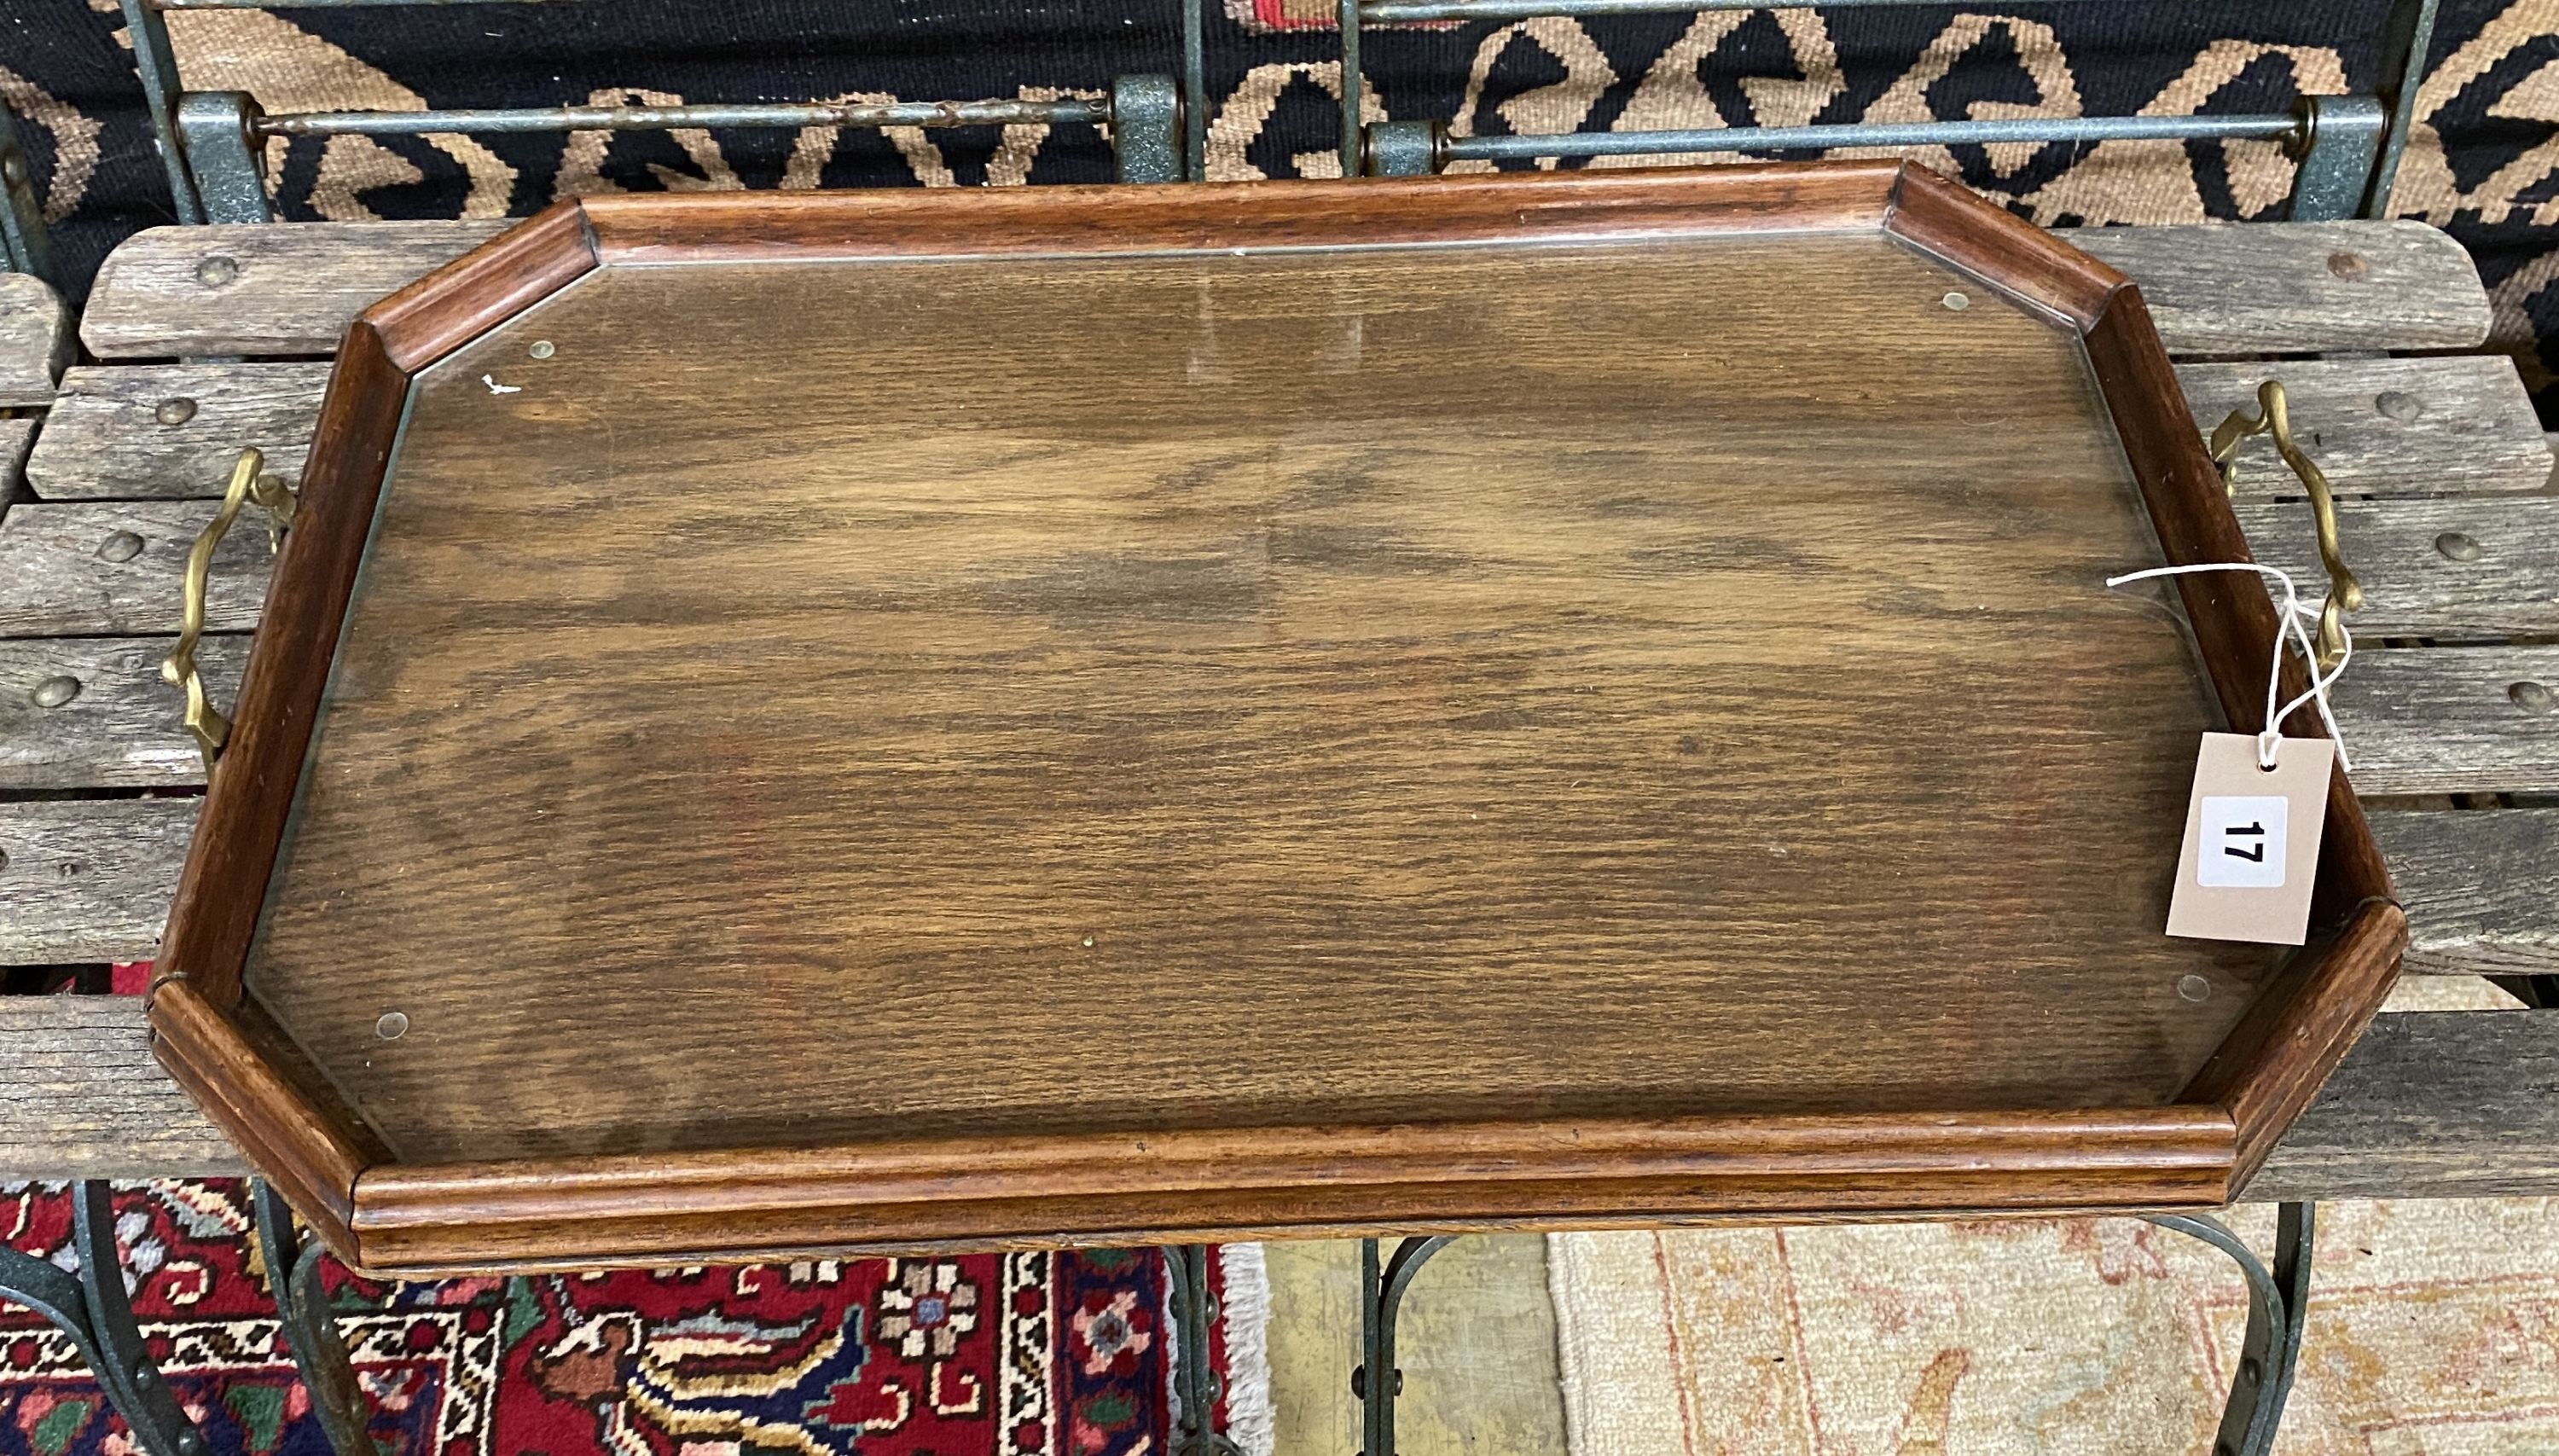 An Edwardian octagonal oak twin handled tray, length 62cm, depth 40cm